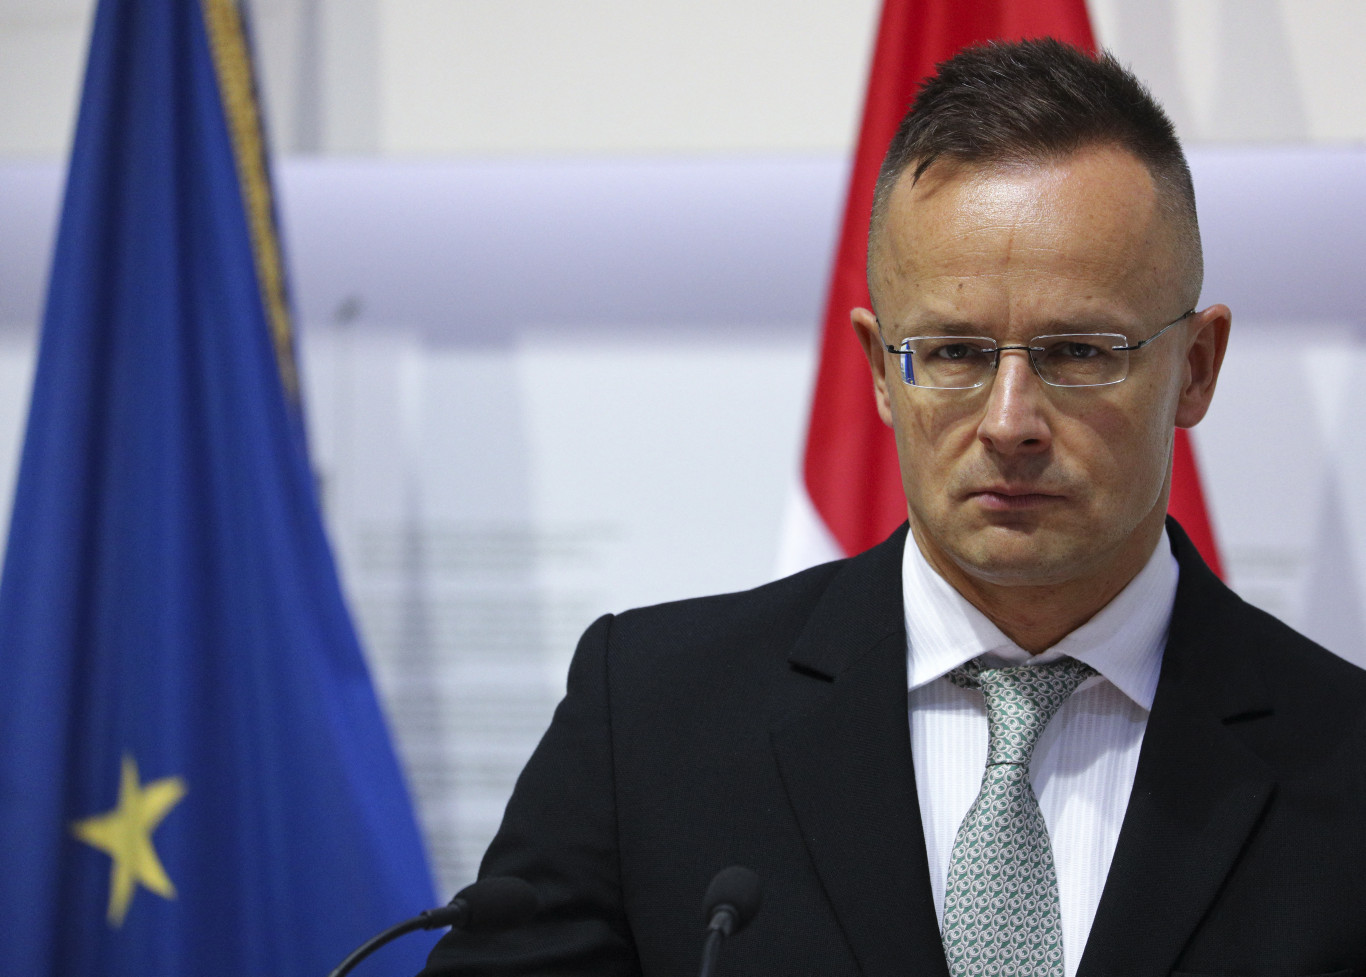 Szijjarto dismisses reports about Hungary blocking €500 million EU military aid to Ukraine